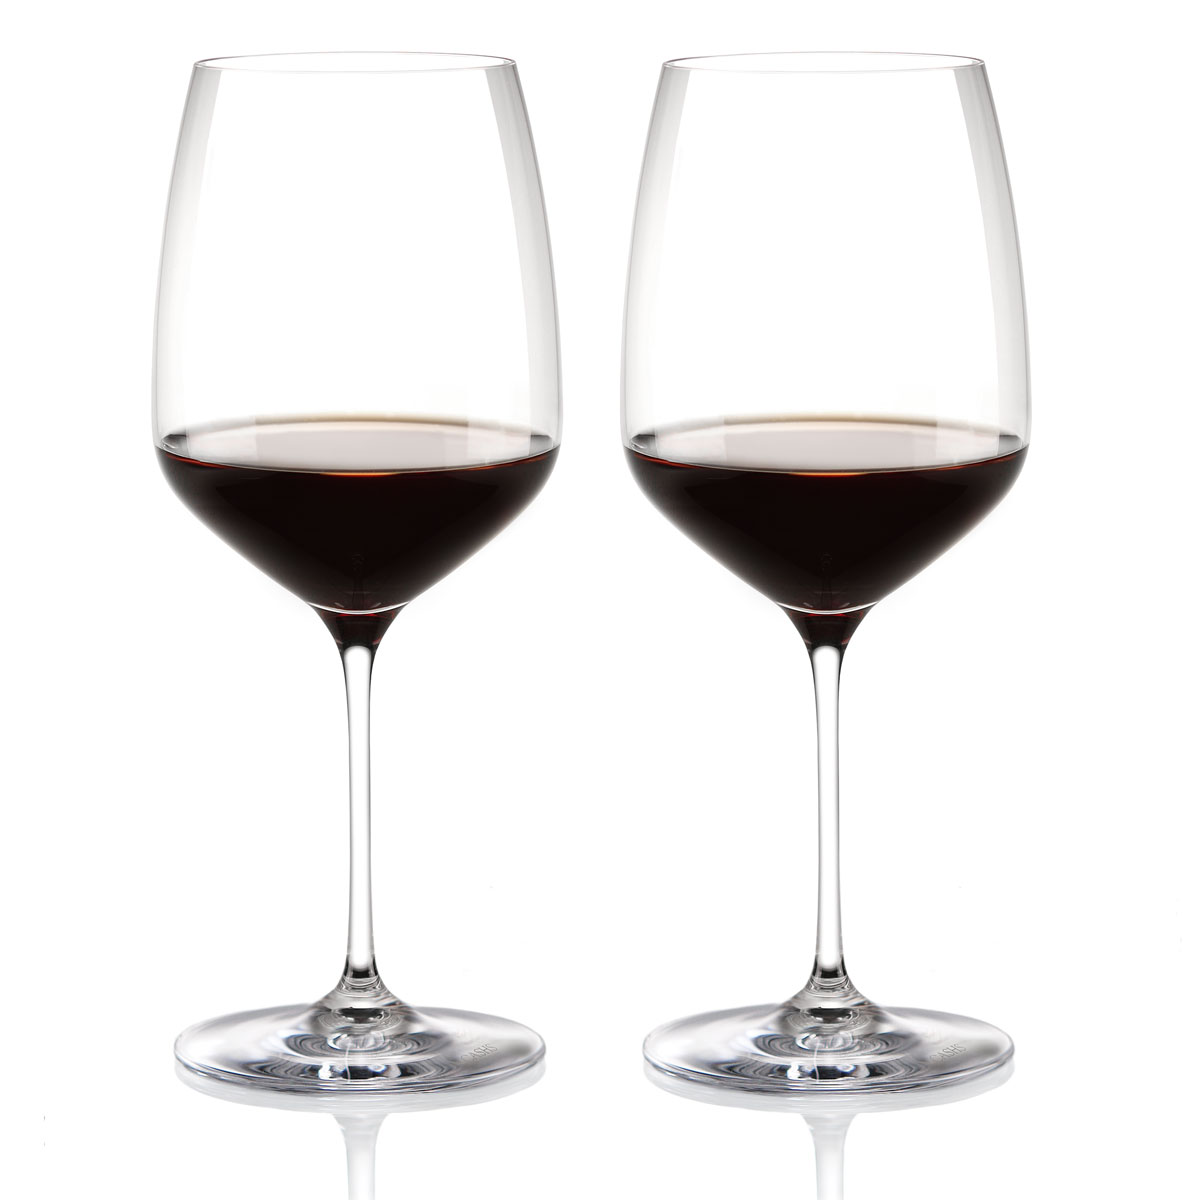 Cashs Ireland Vino Grand Cru Cabernet Merlot Wine Glasses, Pair